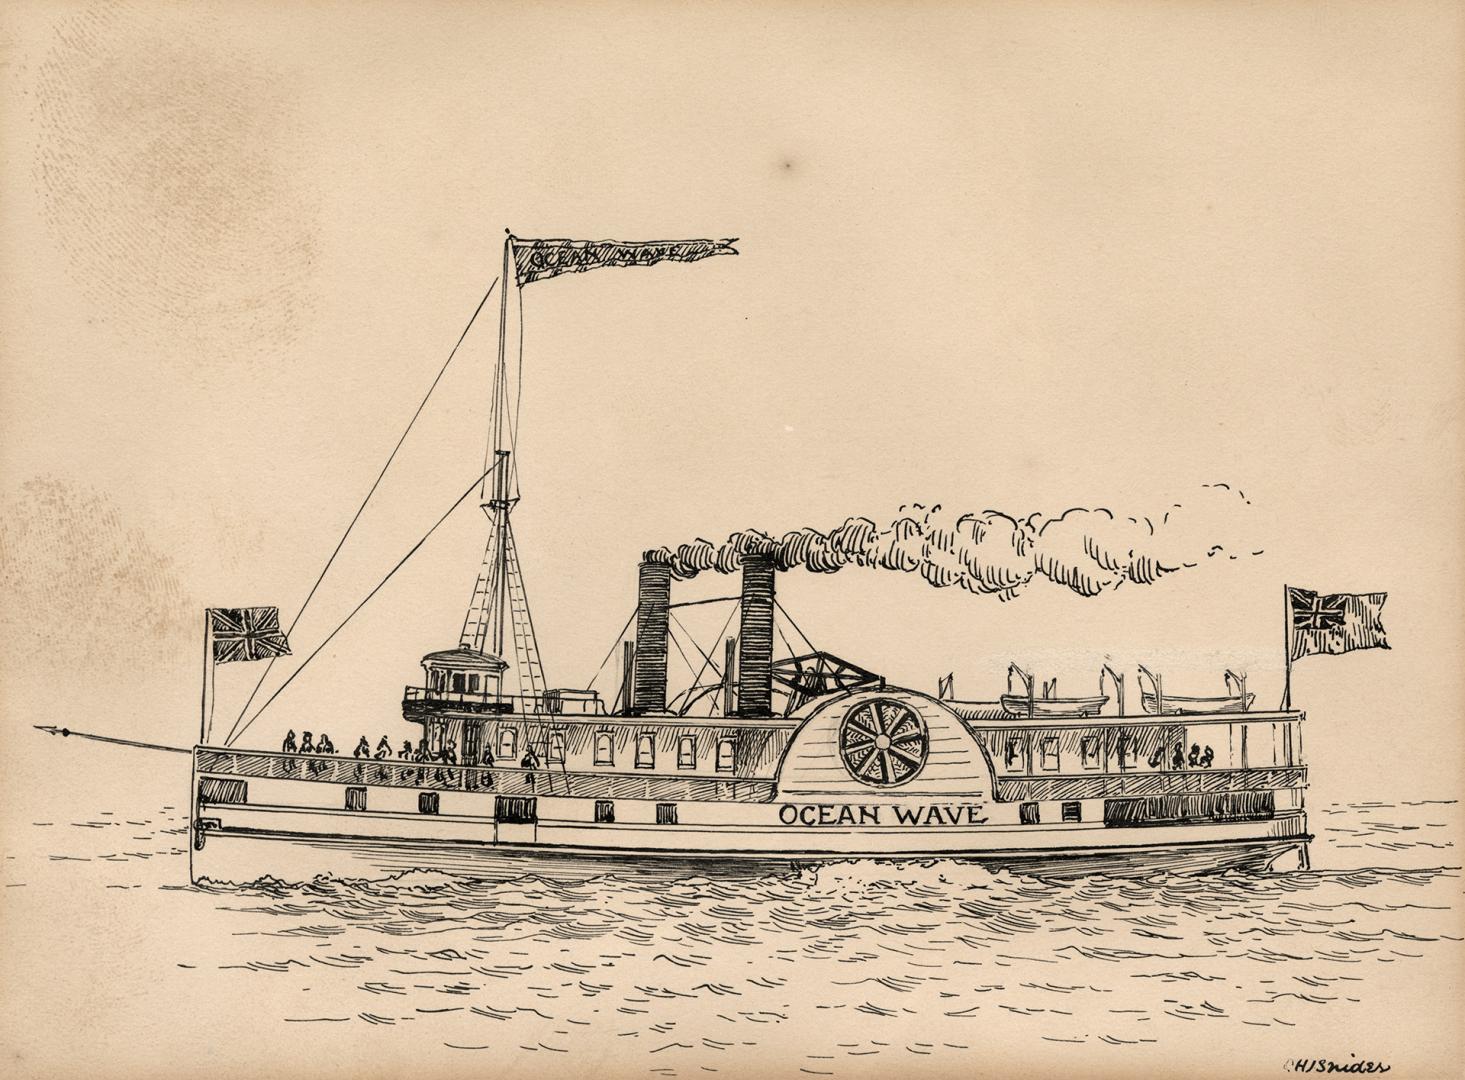 Steamer "Ocean Wave", 1852-53 (St. Lawrence River & Lake Ontario)